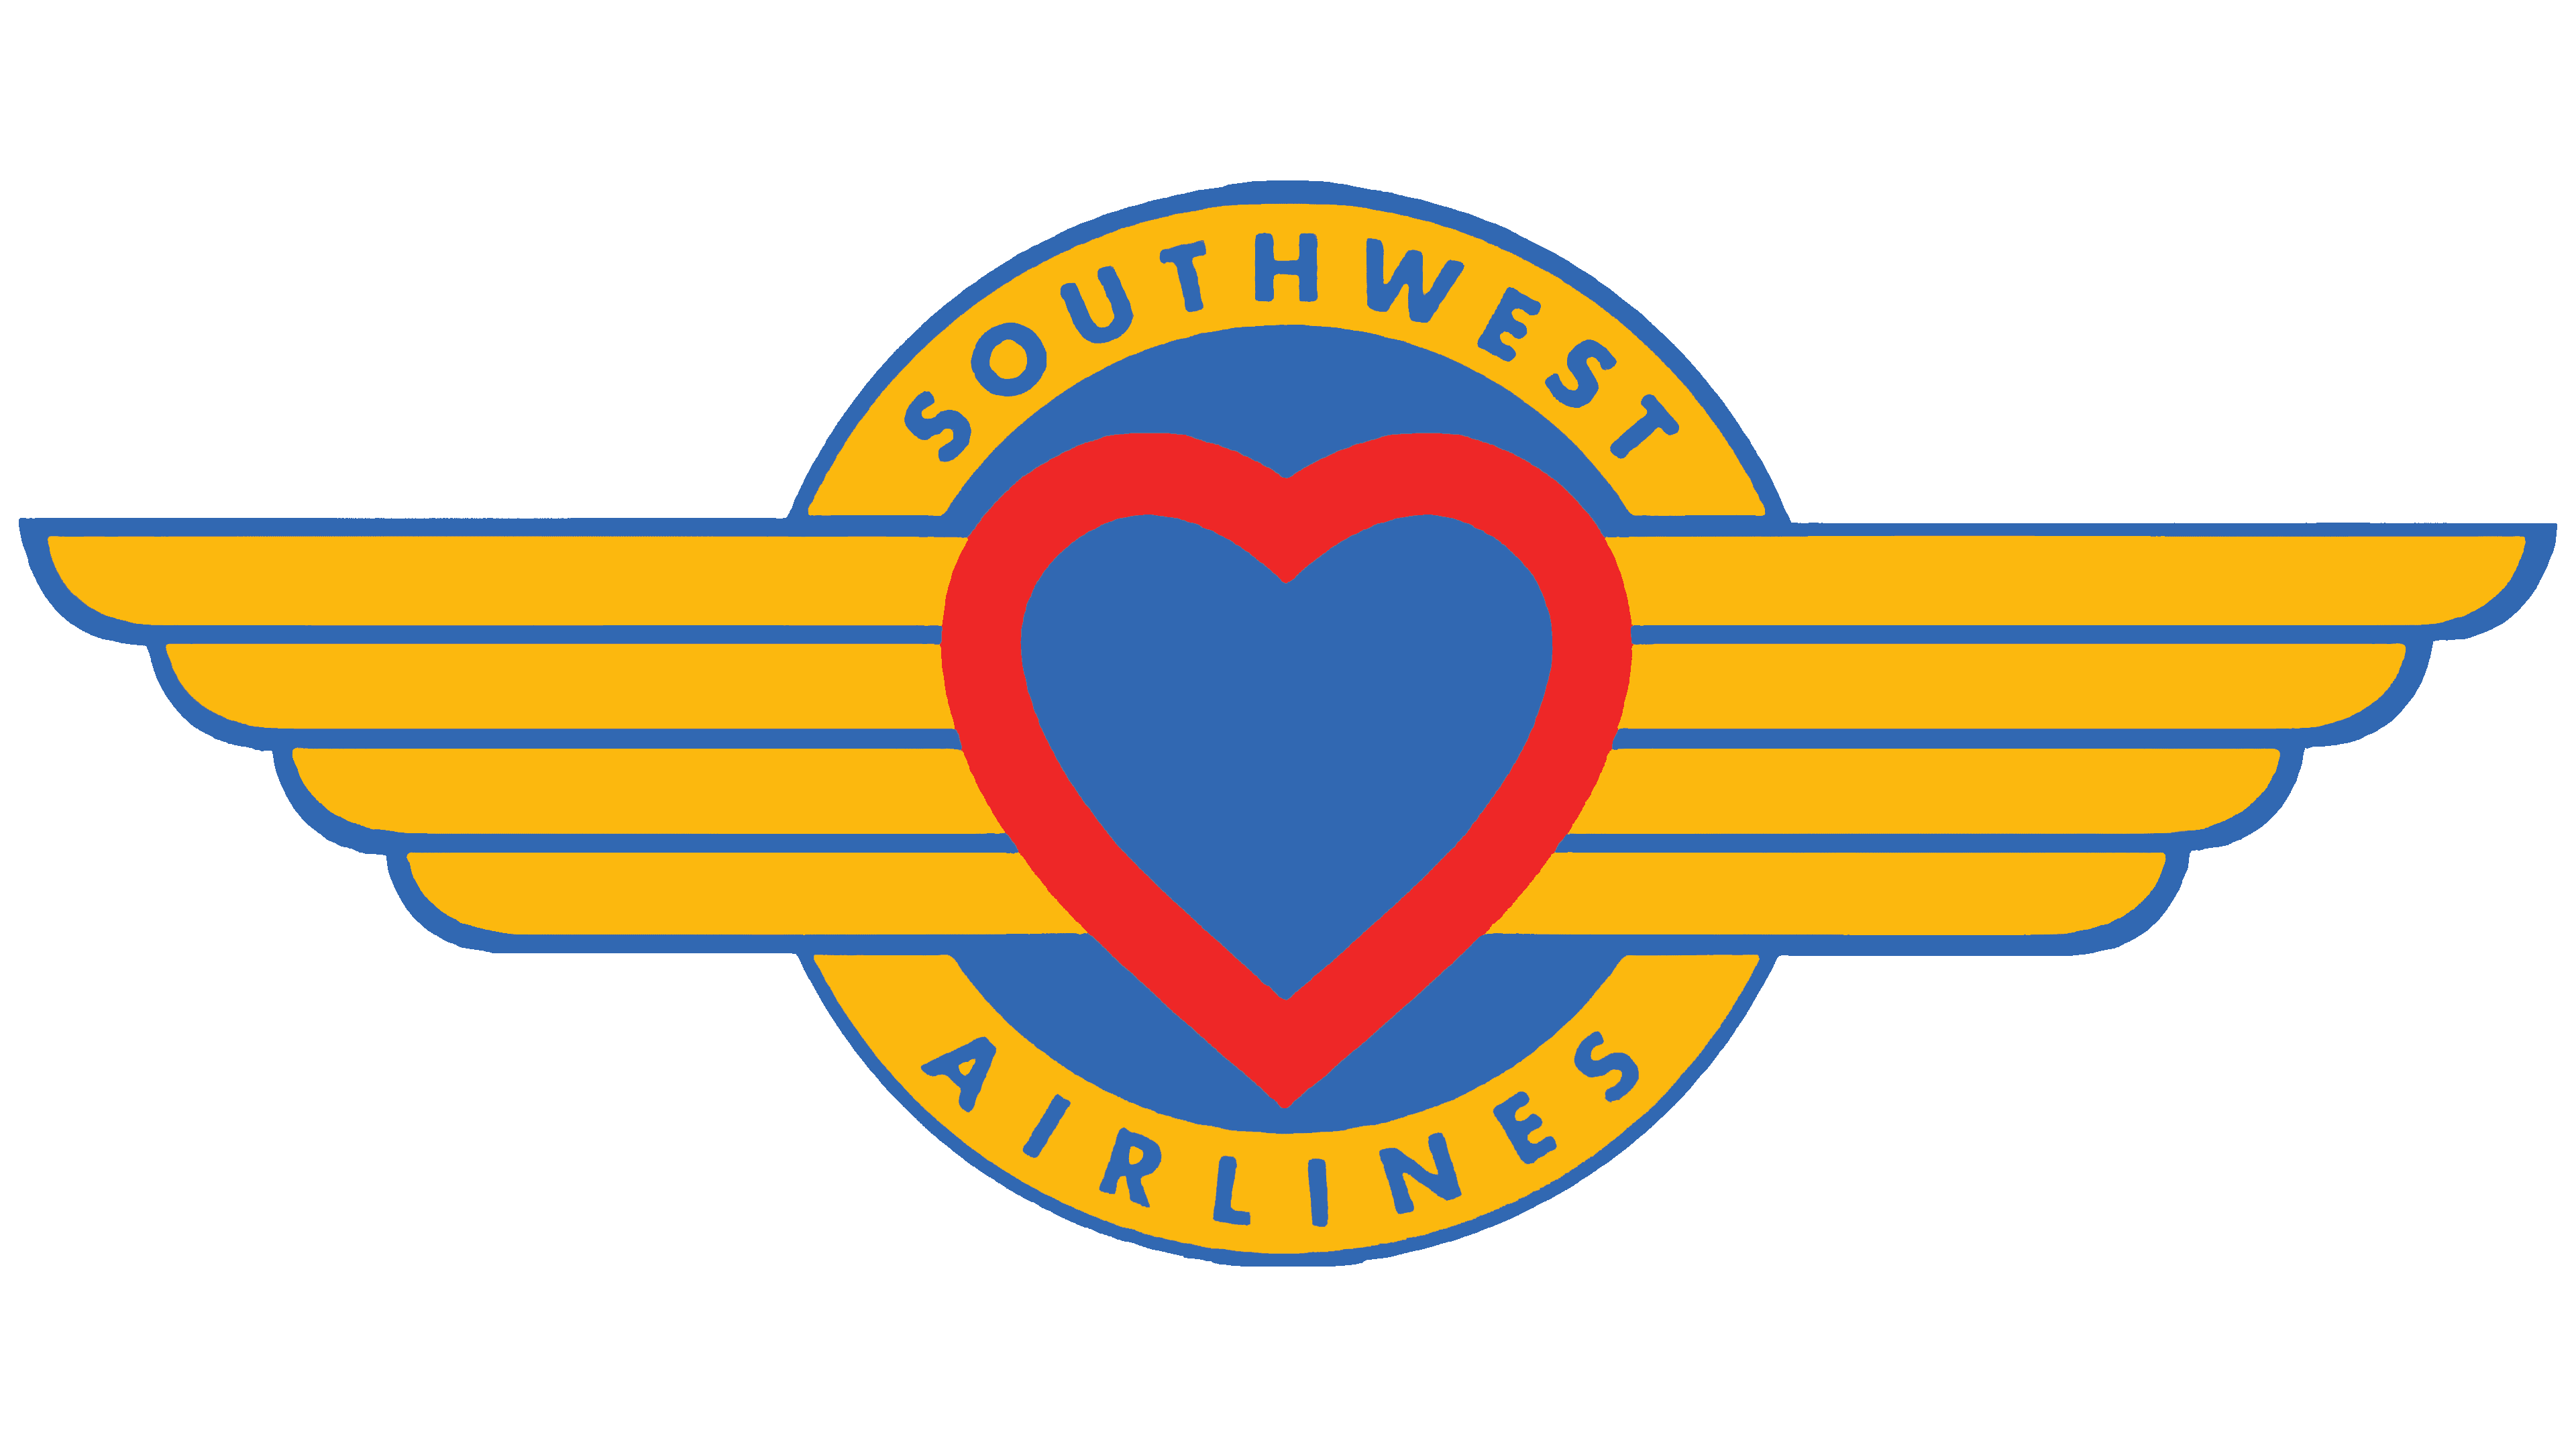 Southwest Airlines Logo | Symbol, History, PNG (3840*2160)